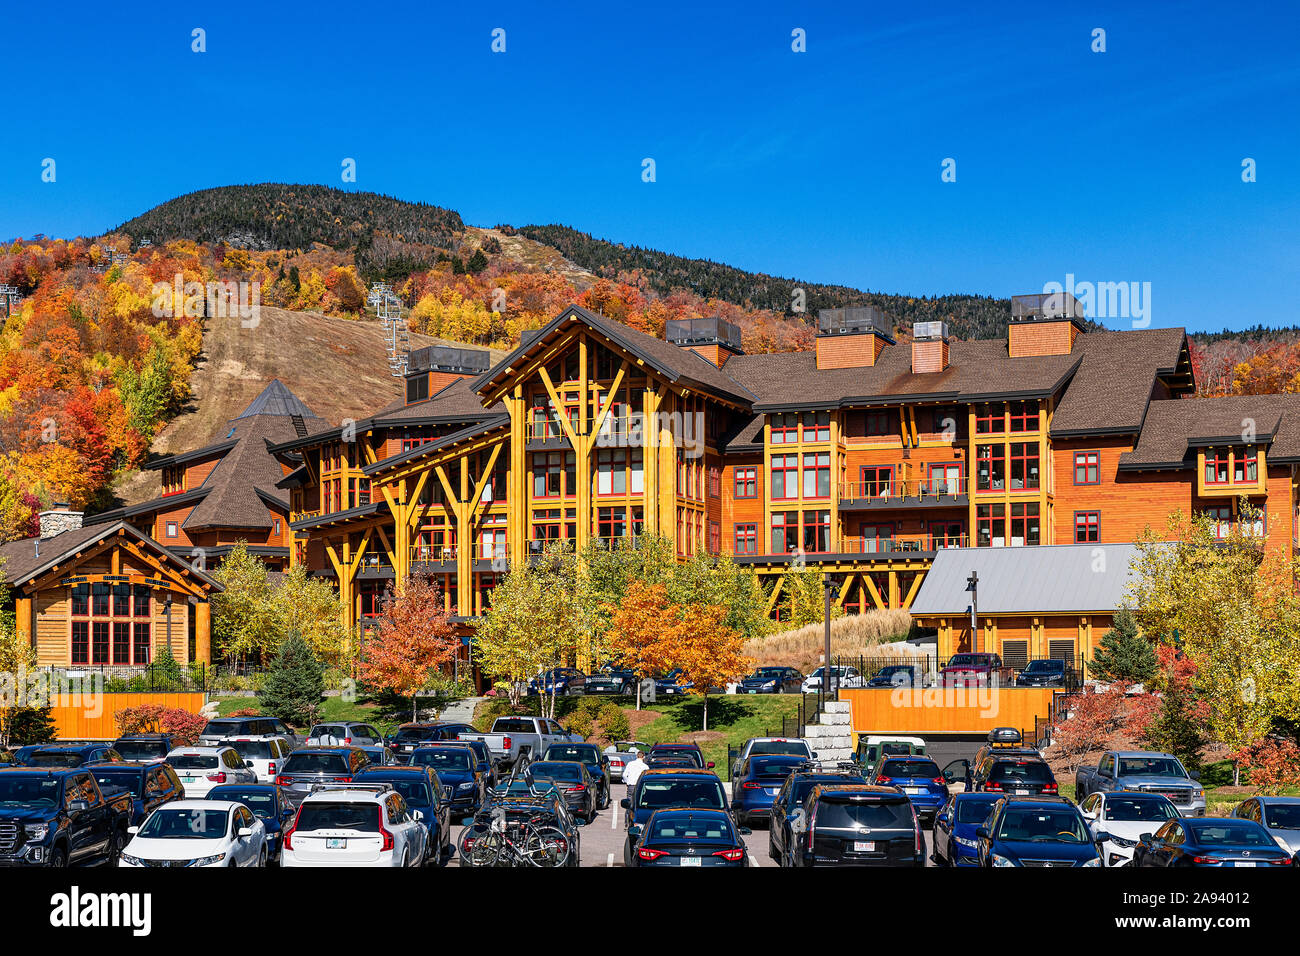 The Lodge at Spruce Peak ski resort, Vermont, USA. Stock Photo